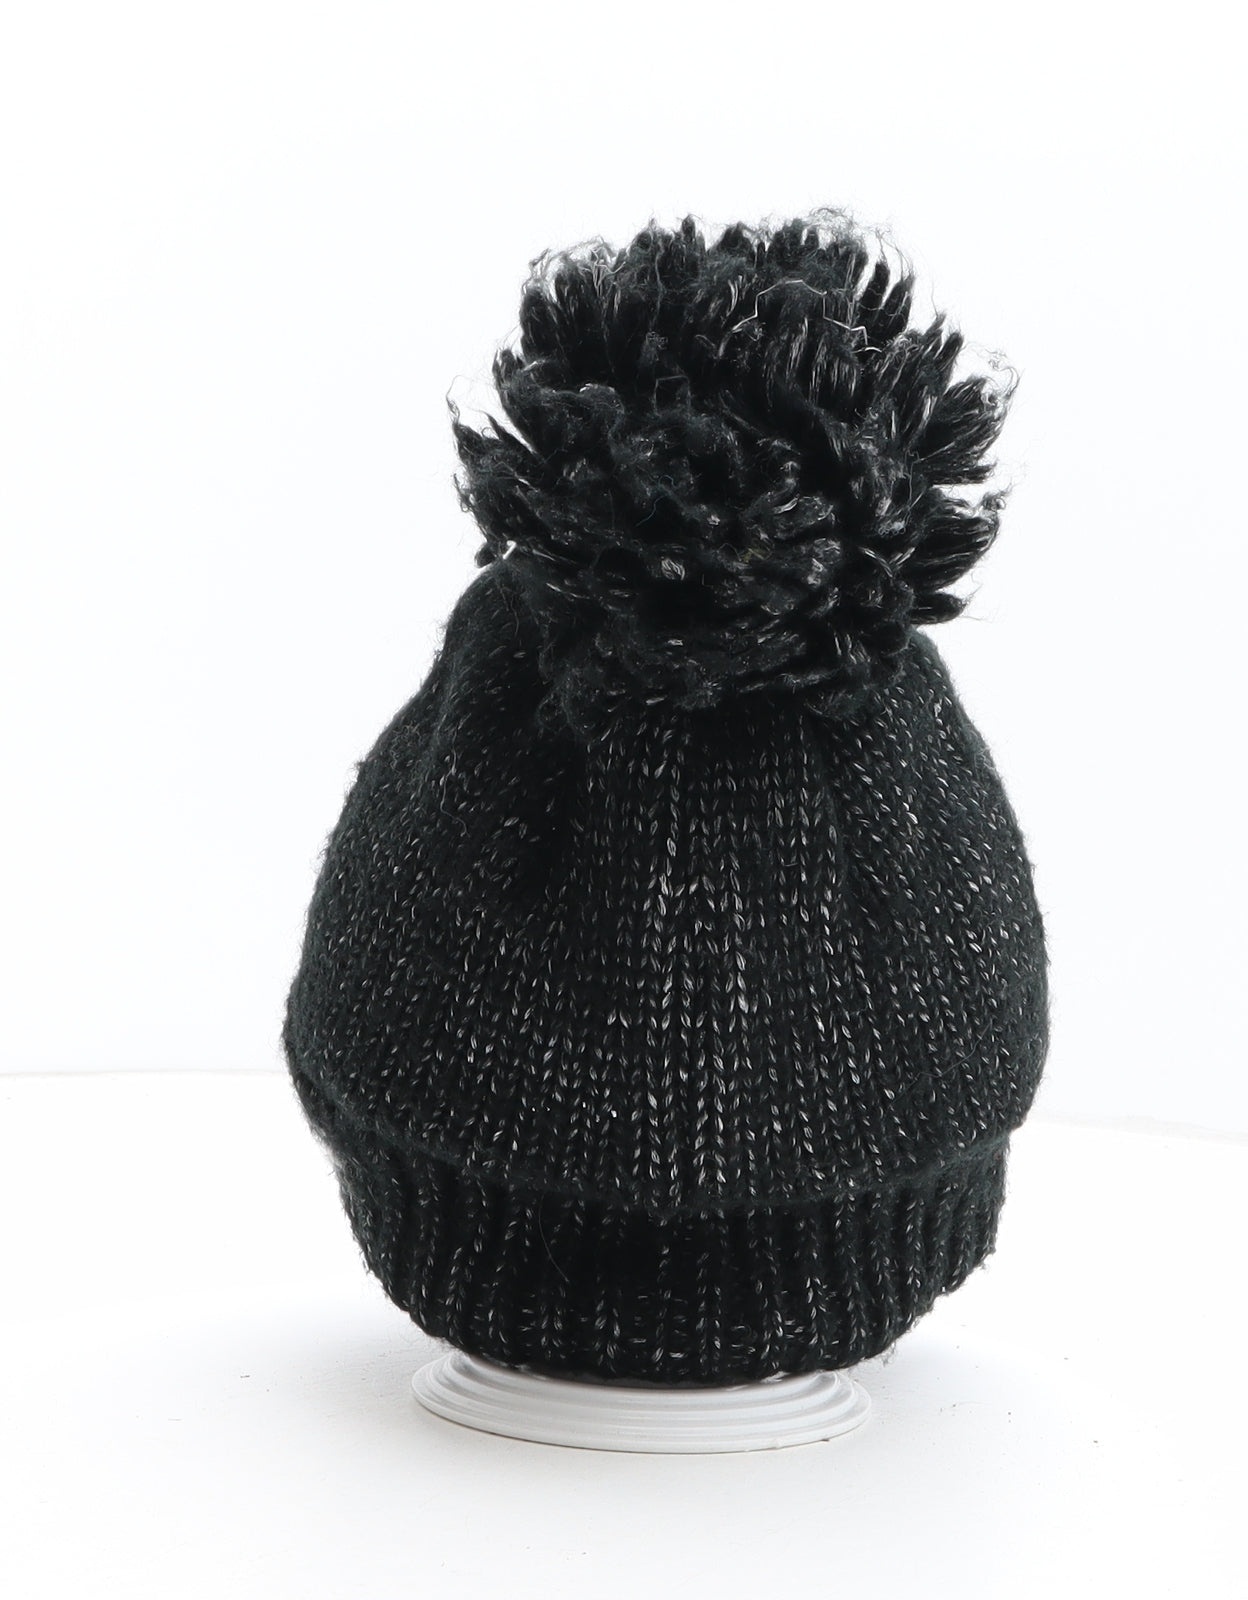 TU Girls Black Acrylic Bobble Hat One Size - Star Moon Detail